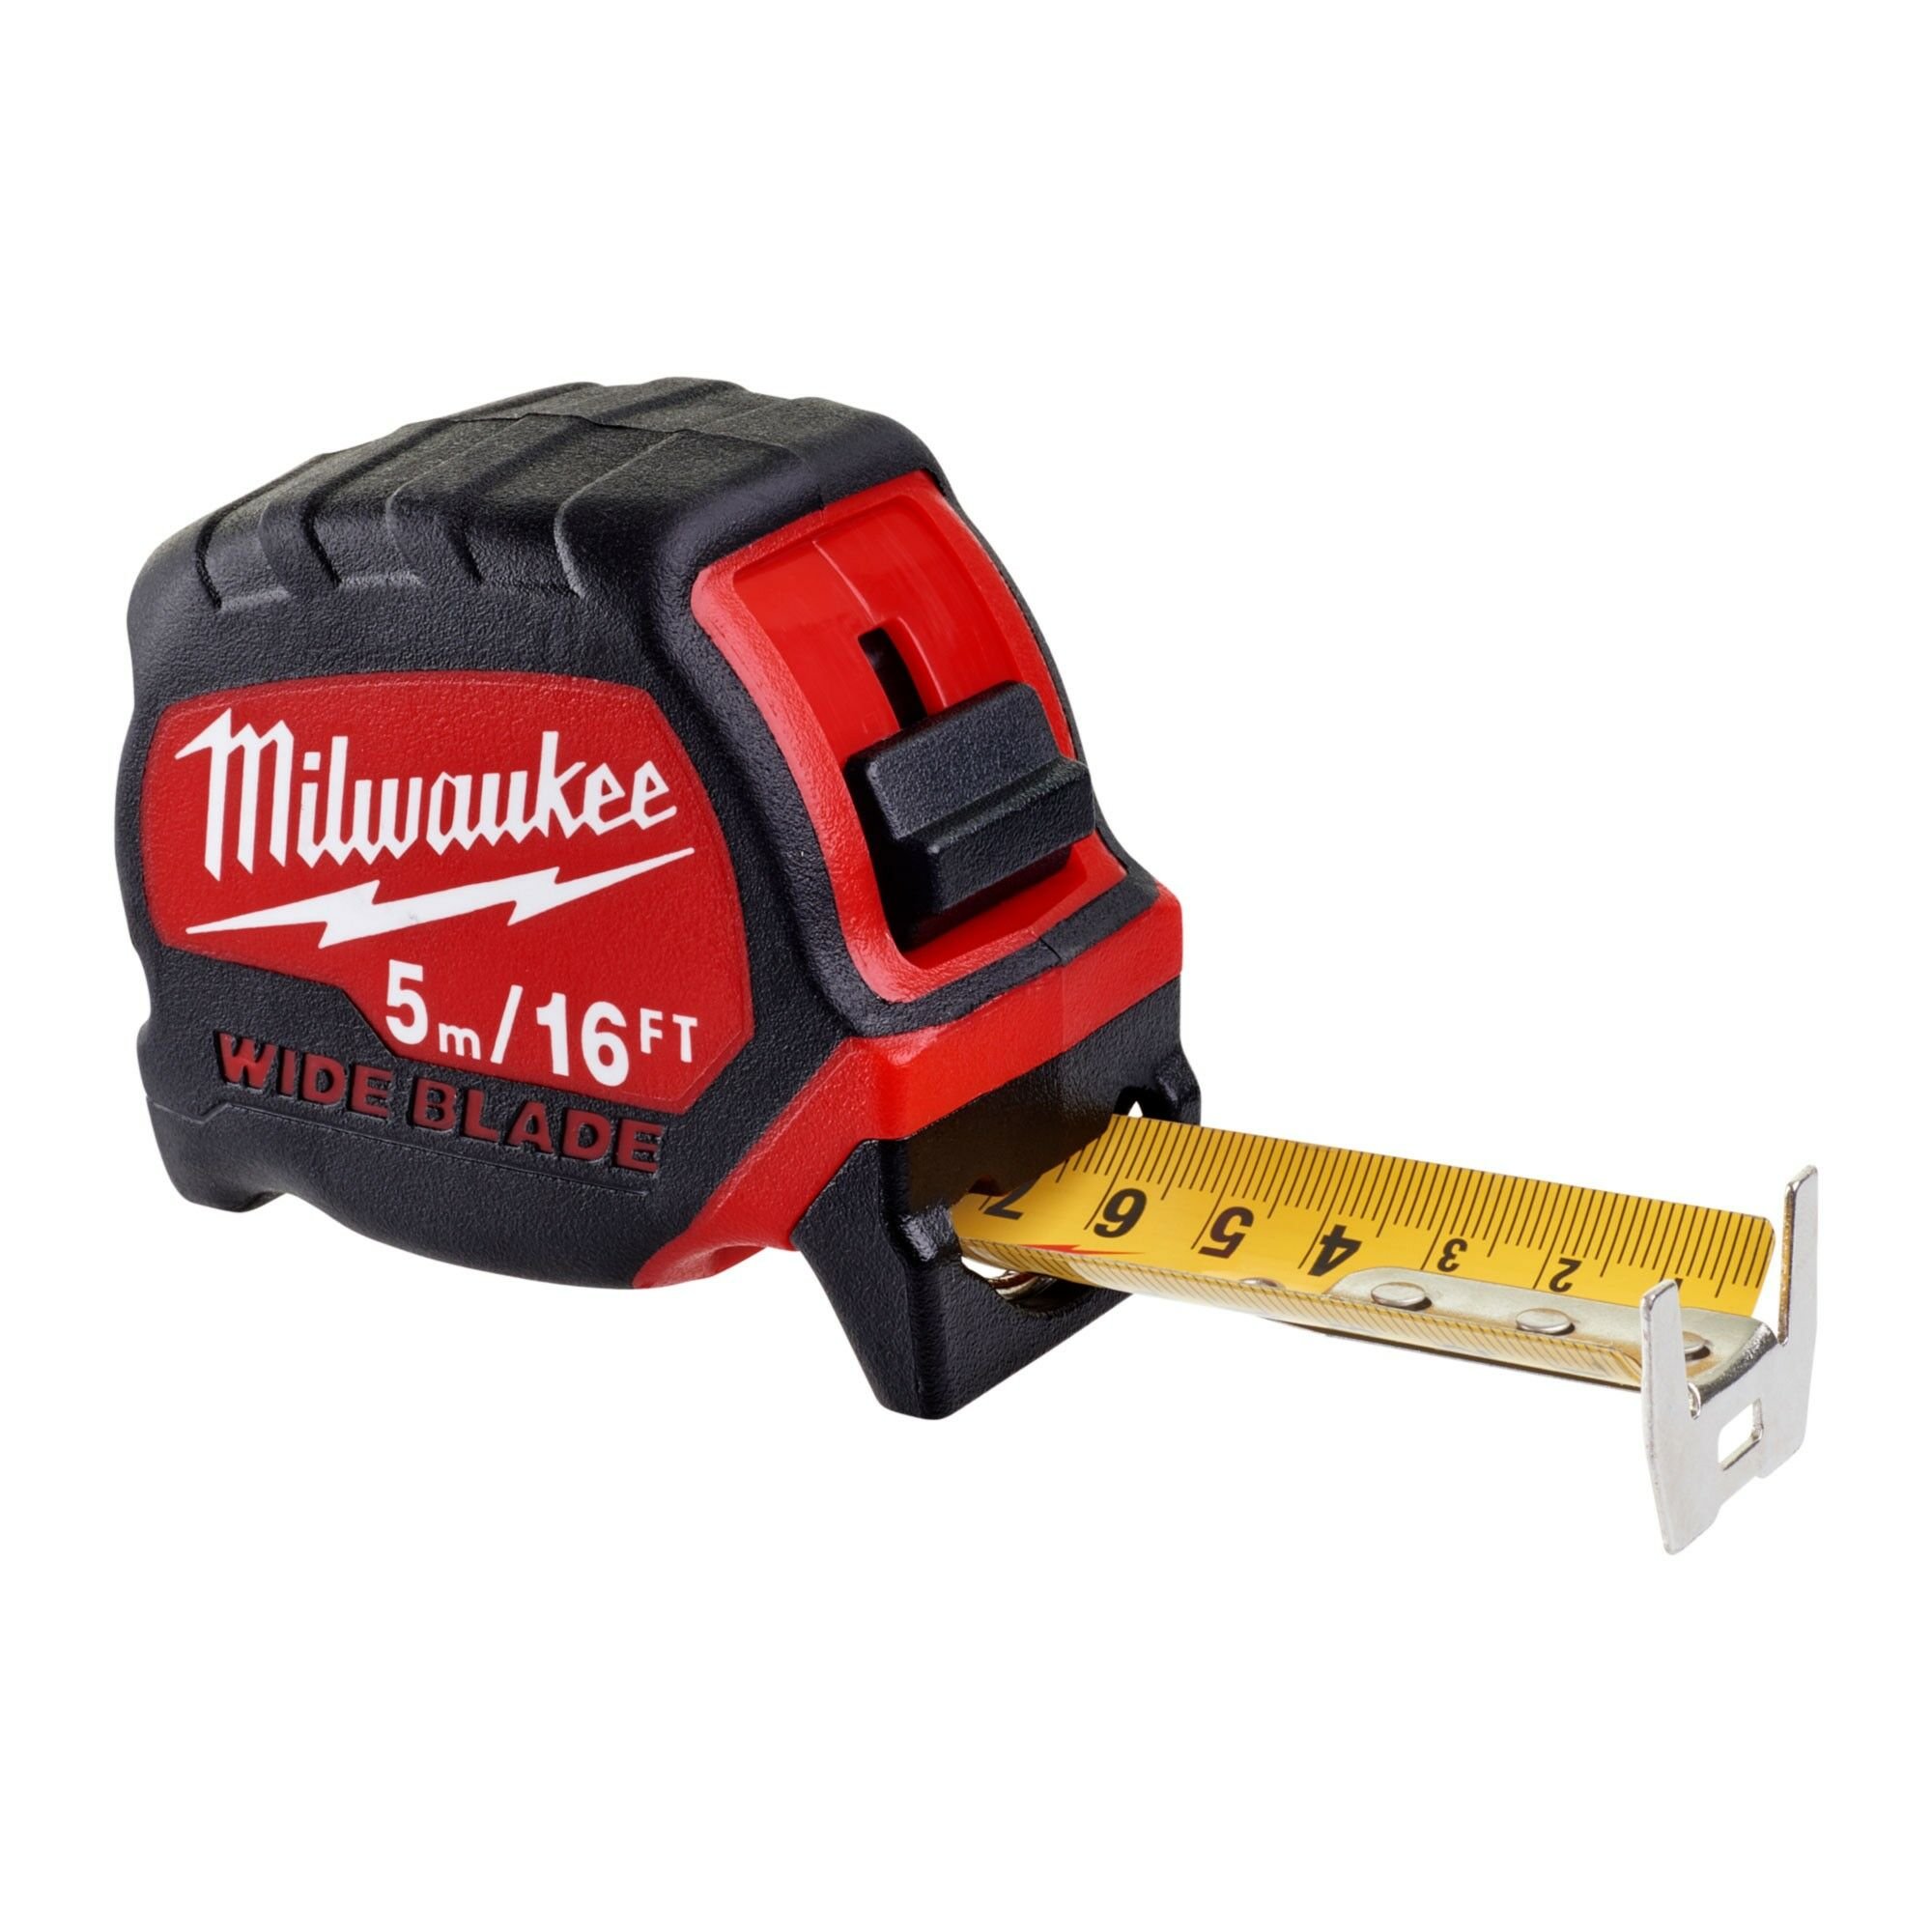 Milwaukee 4932471817 Premium Wide Blade 5m/16ft Tape Measure